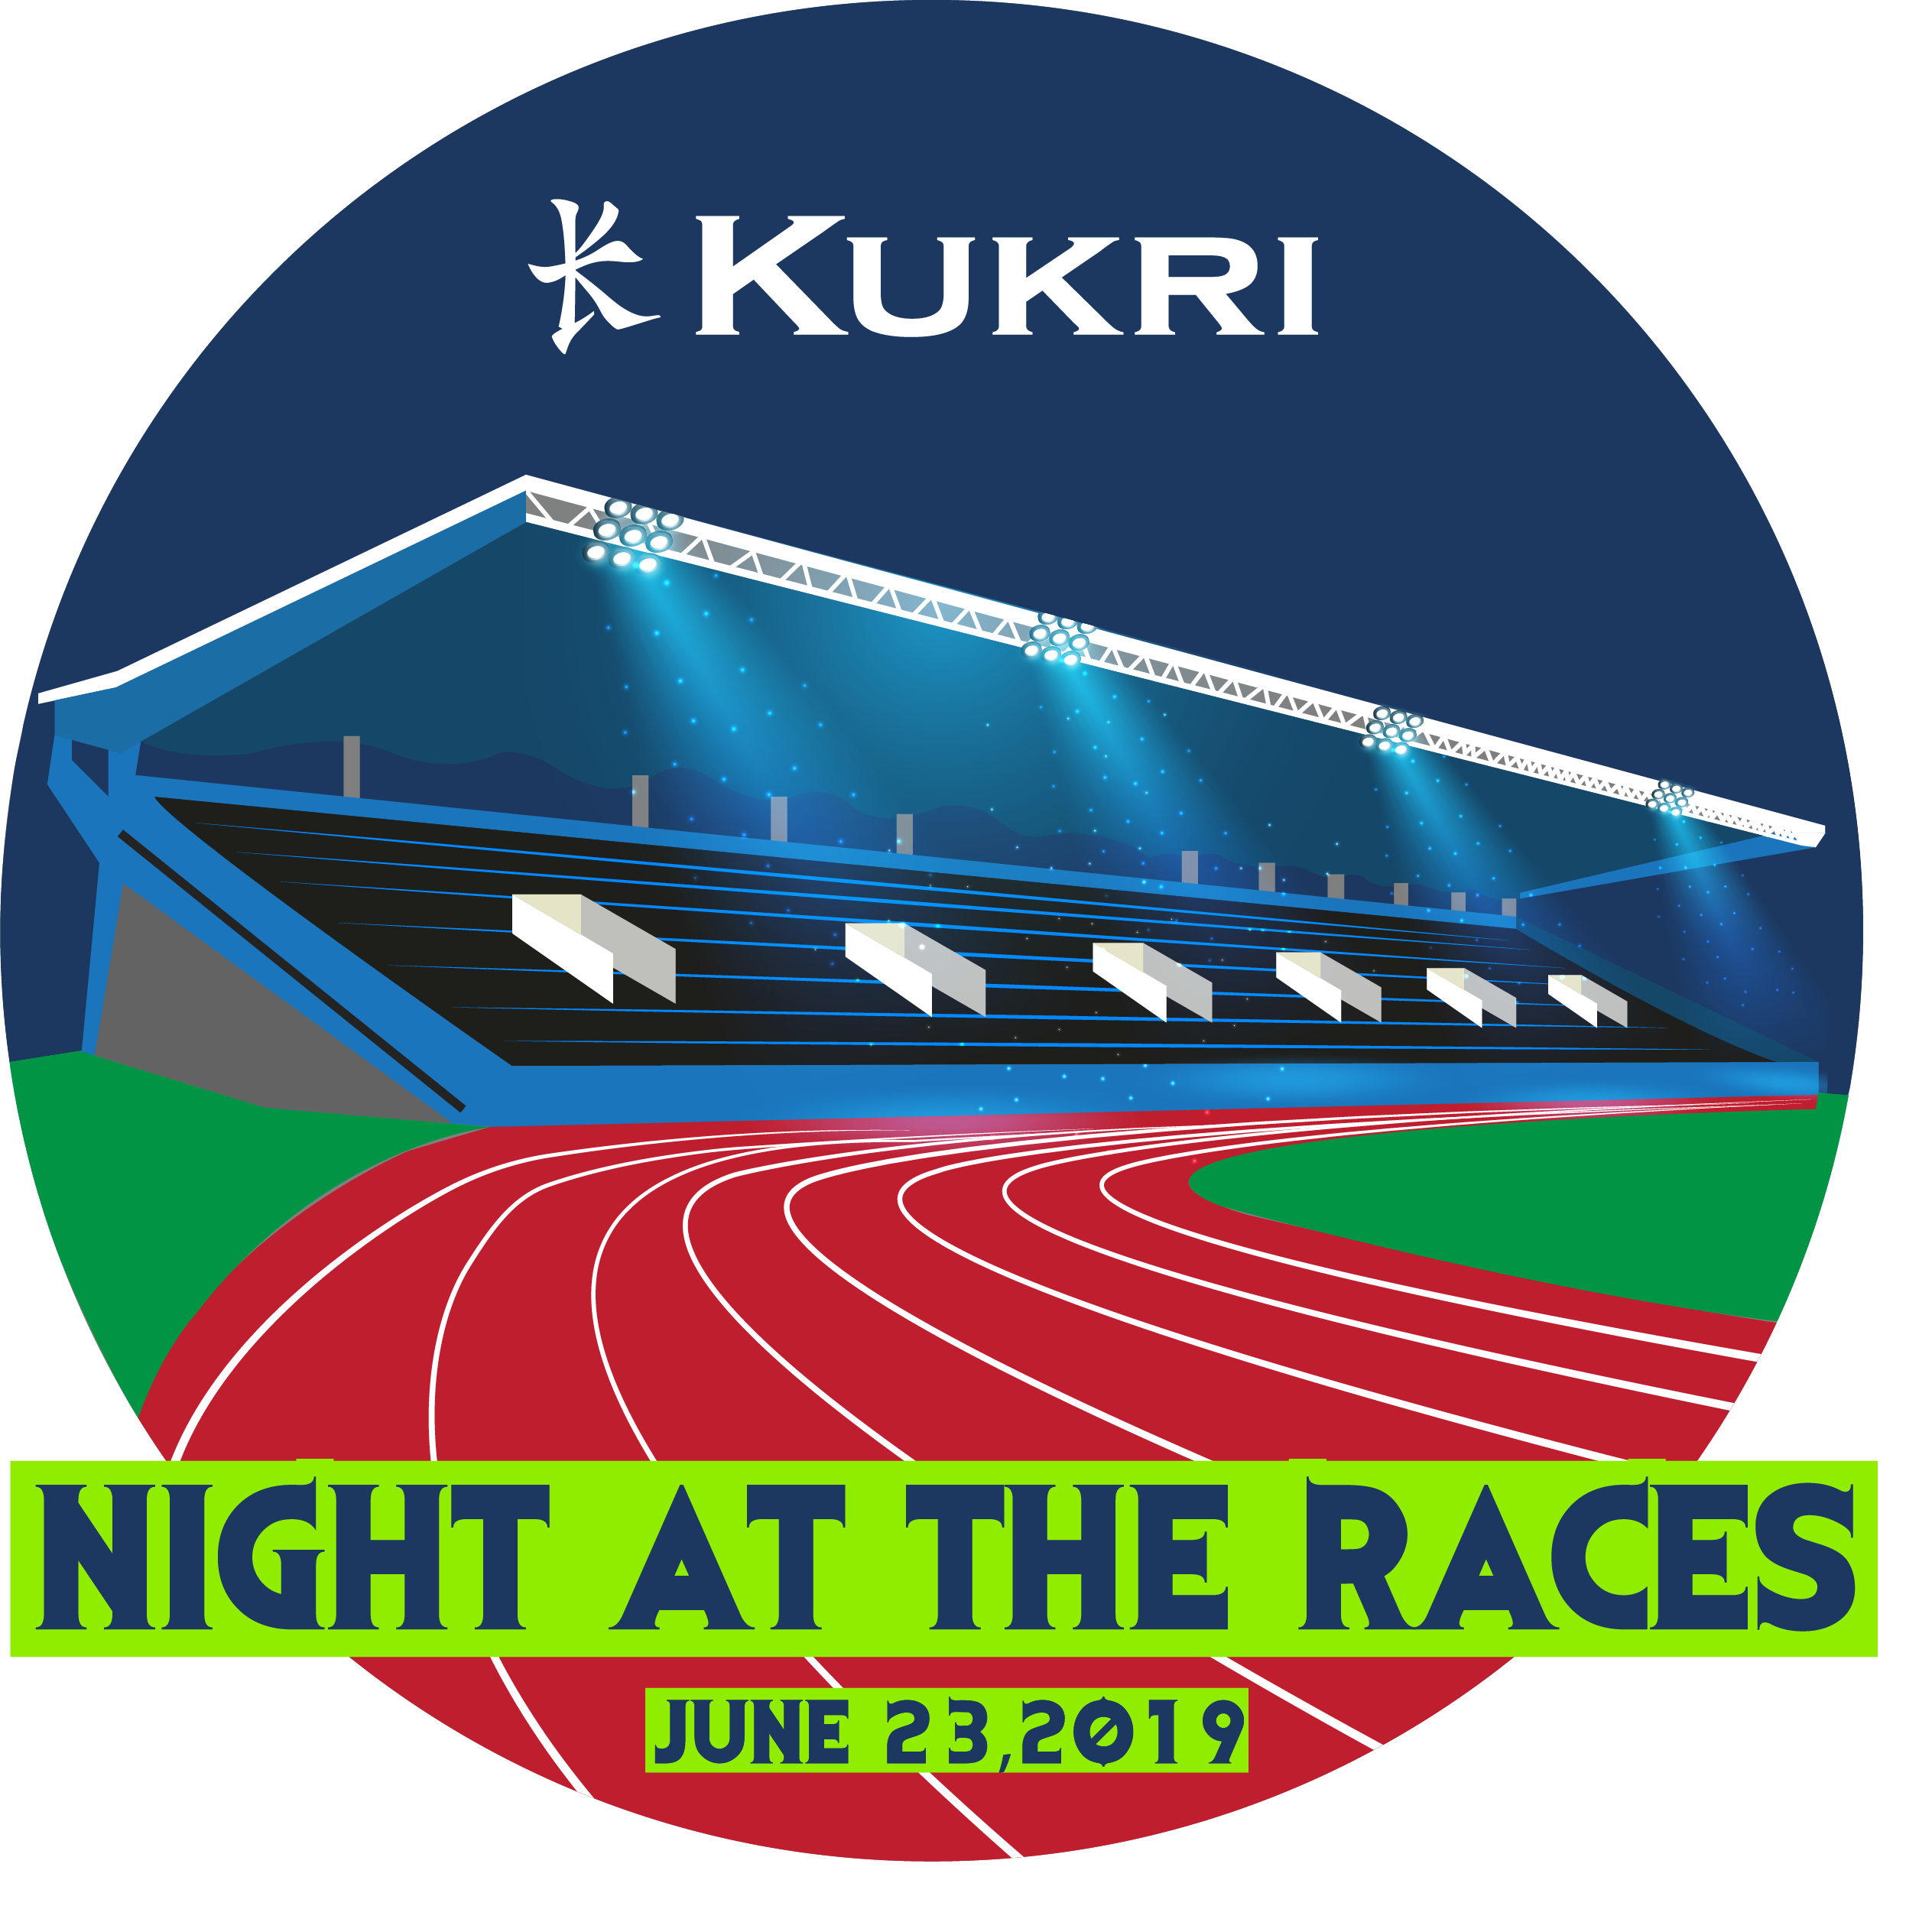 Kukri Night at the Races